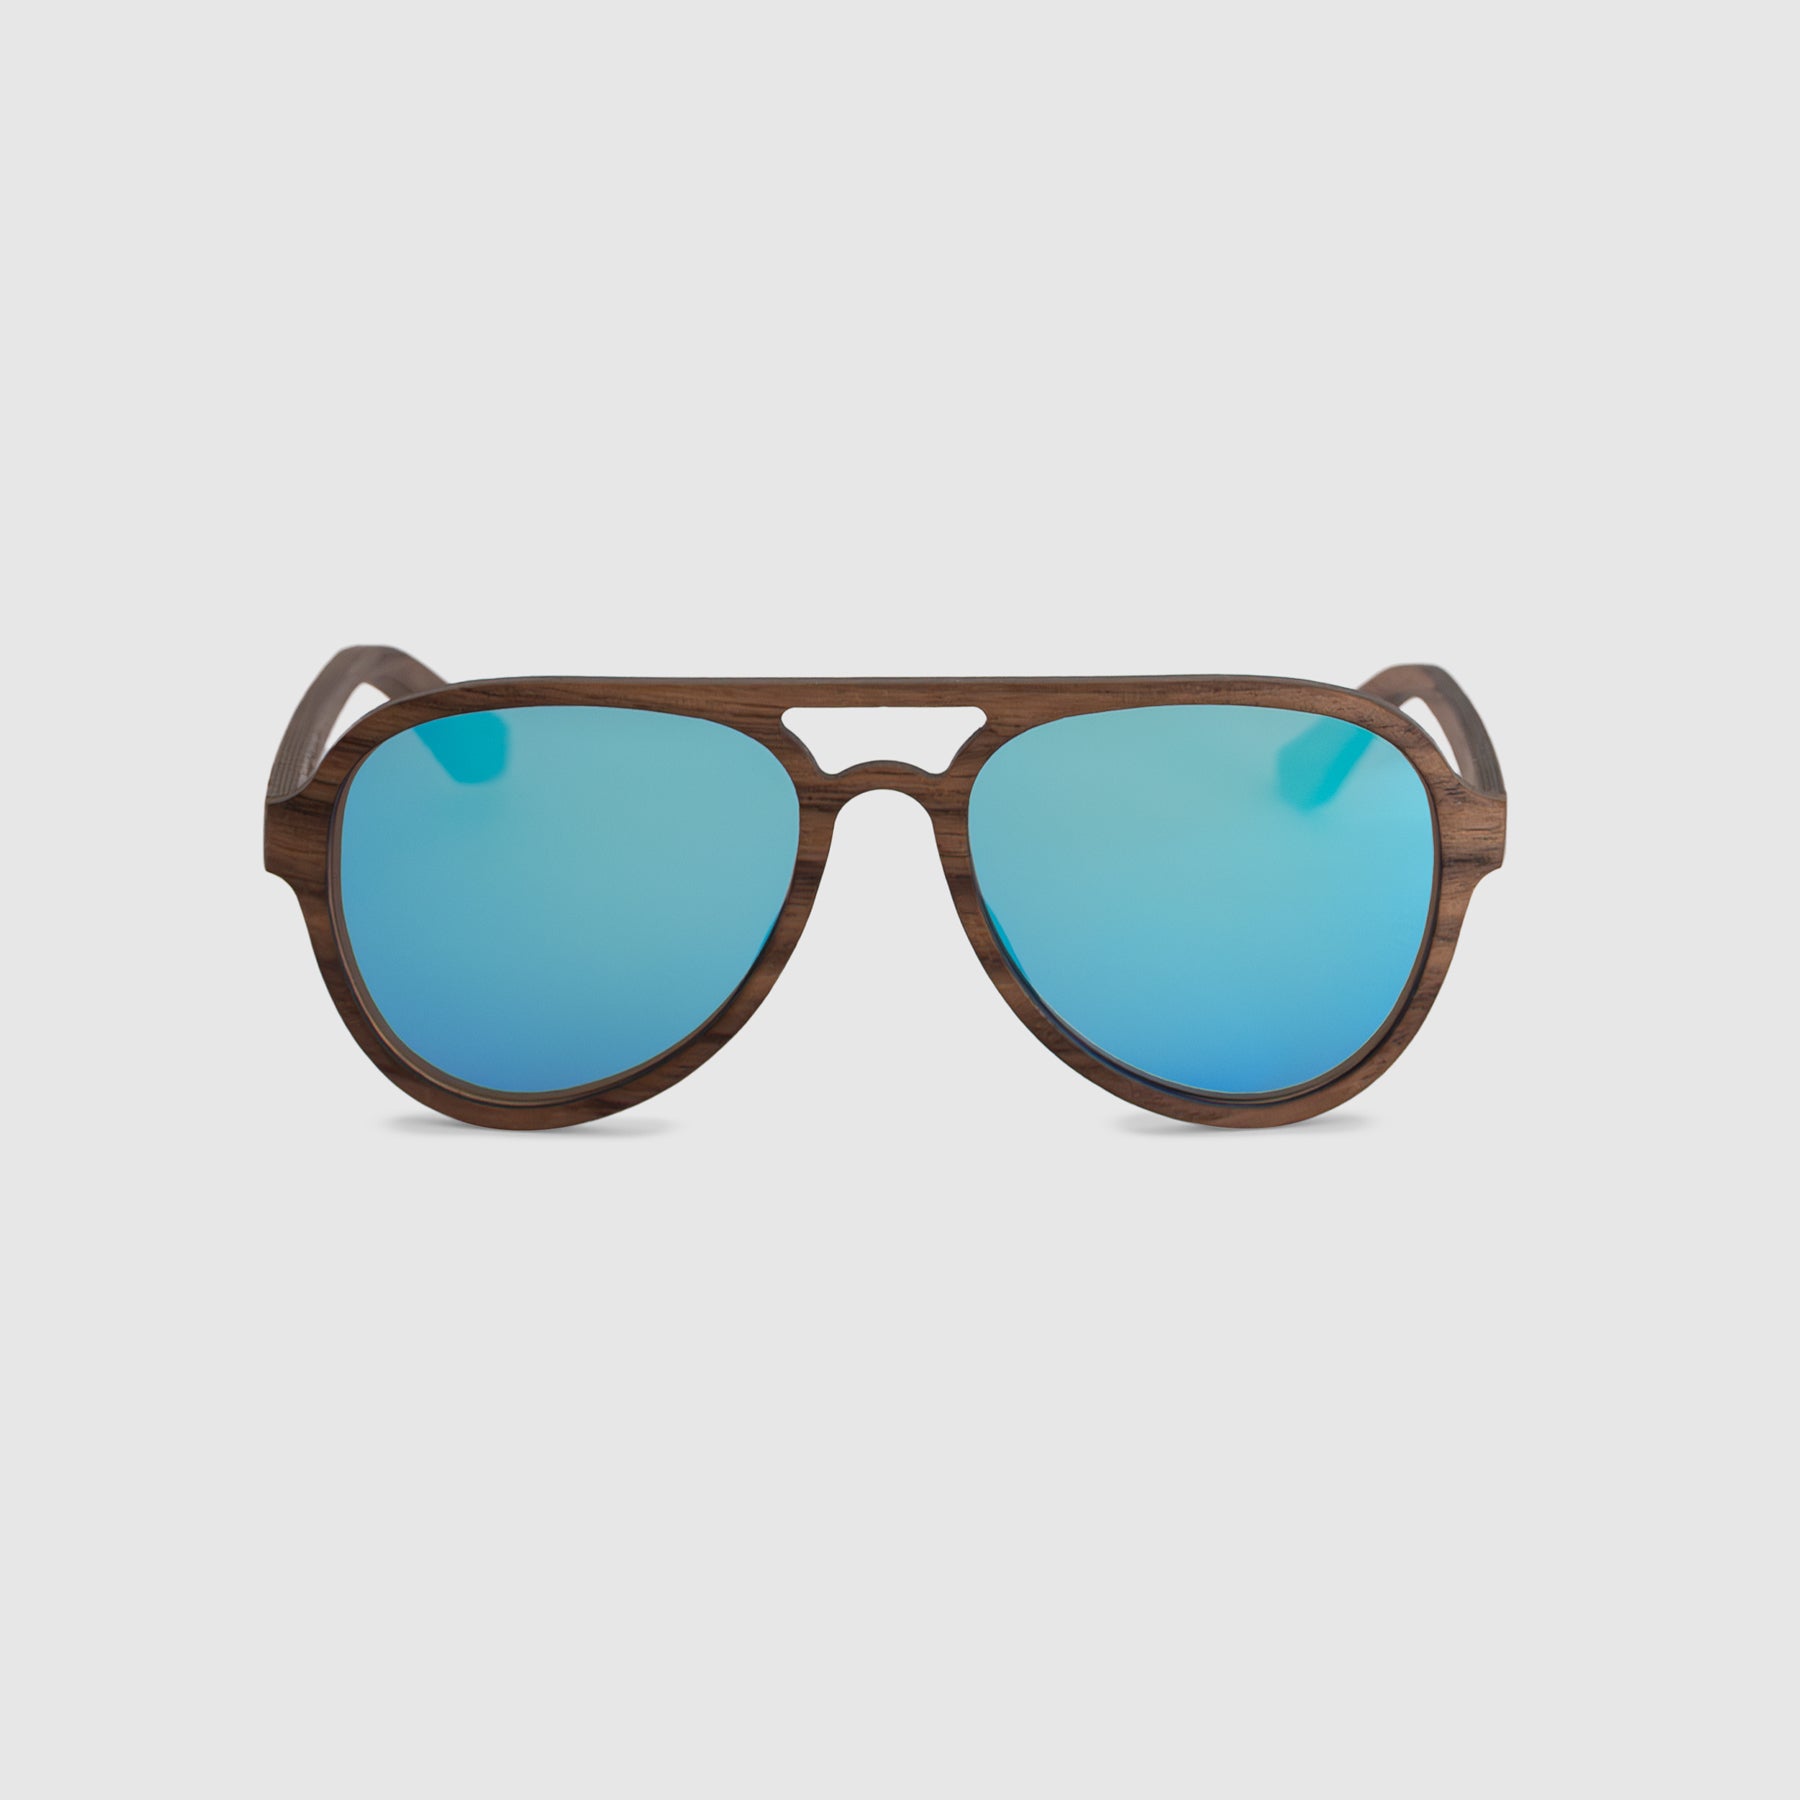 Ocea Dark Wood Aviator Sunglasses Front View 